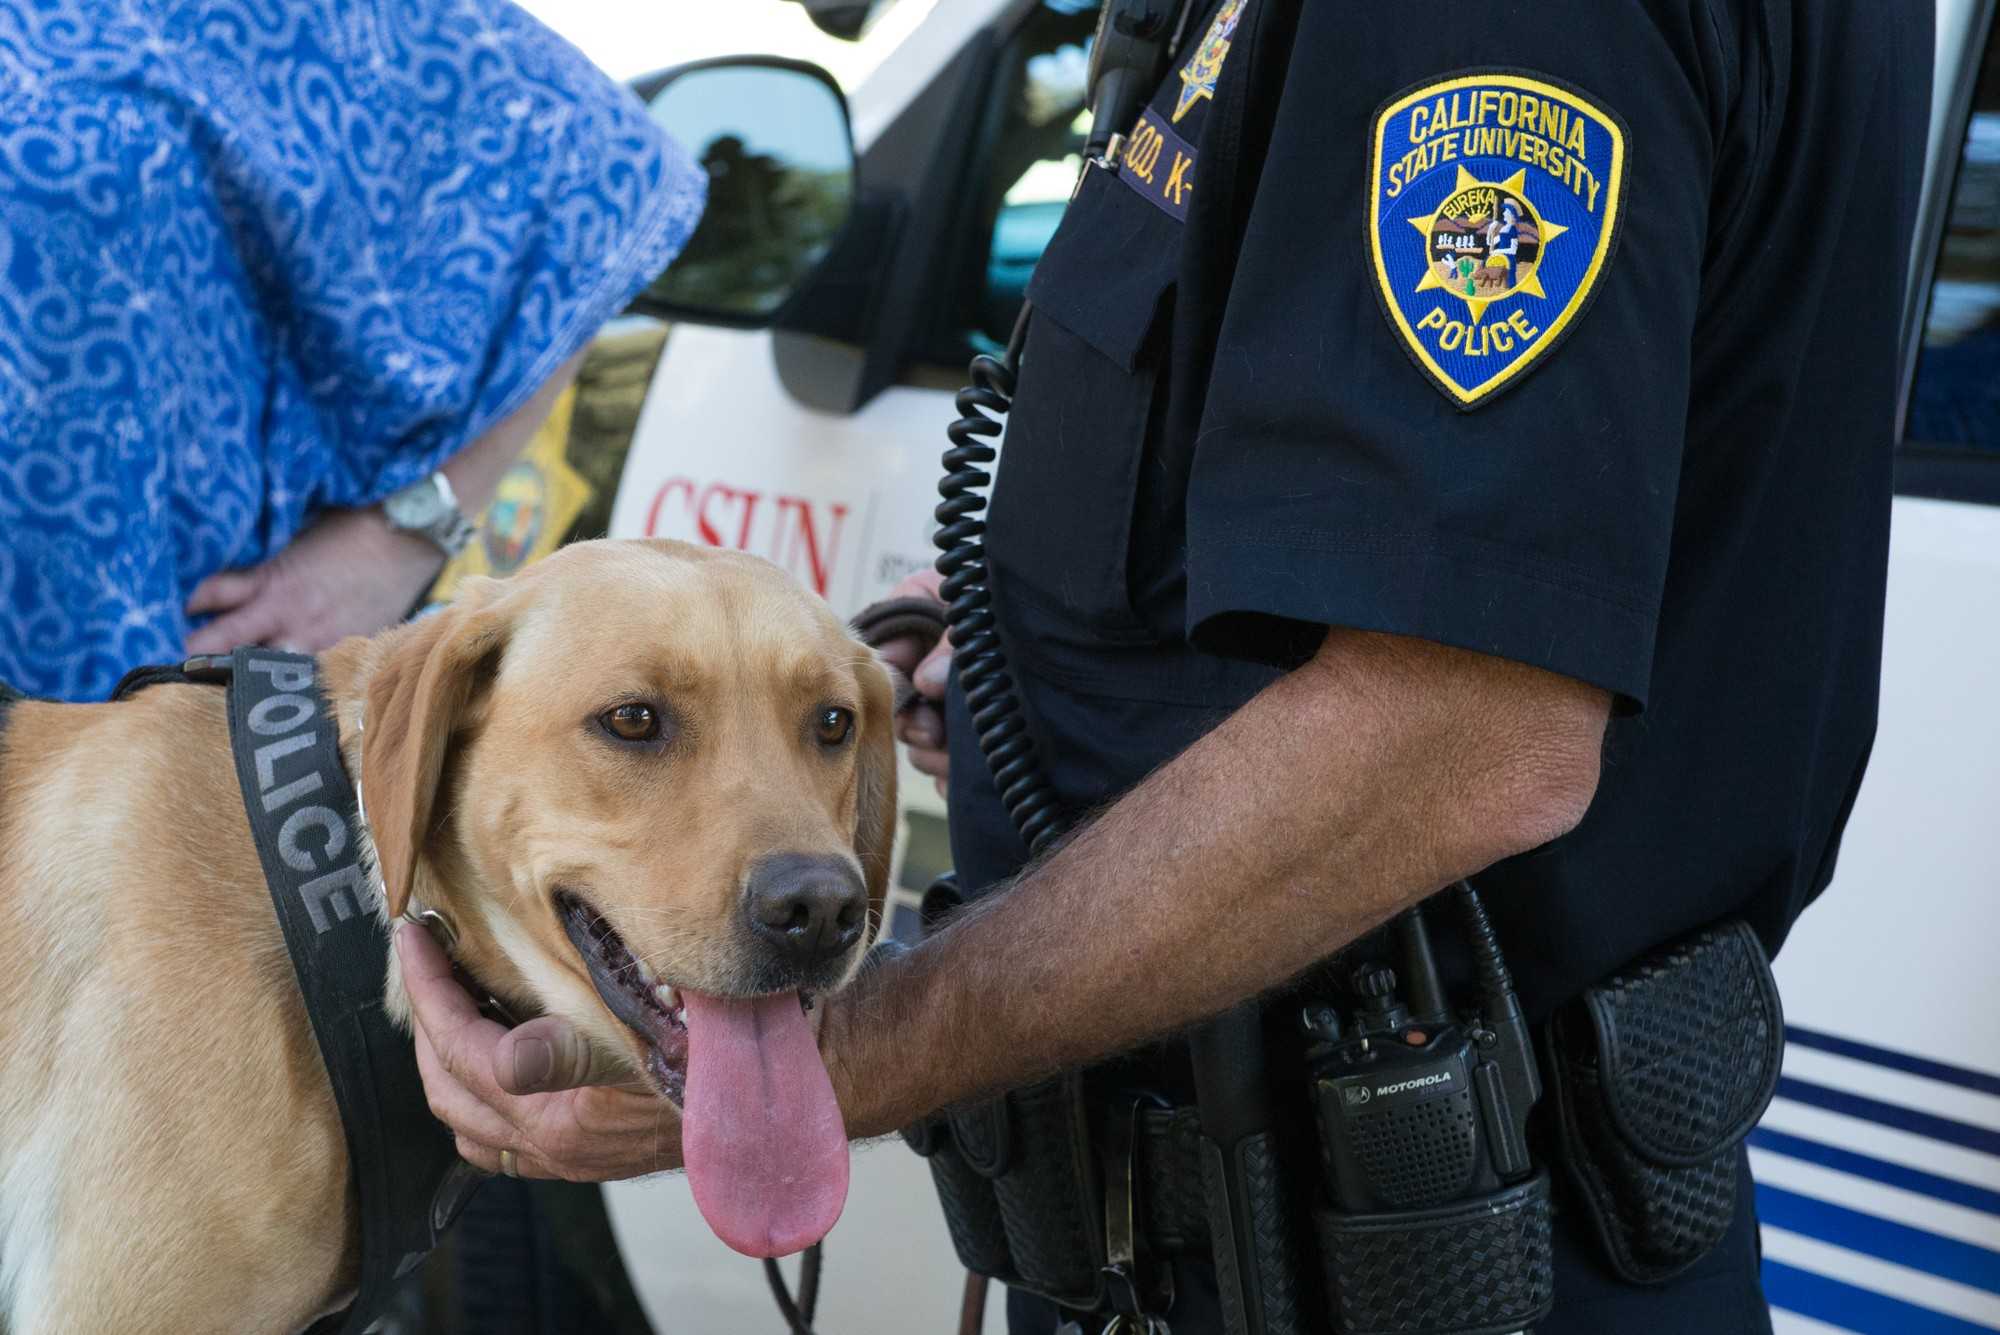 Police dog shown grinning